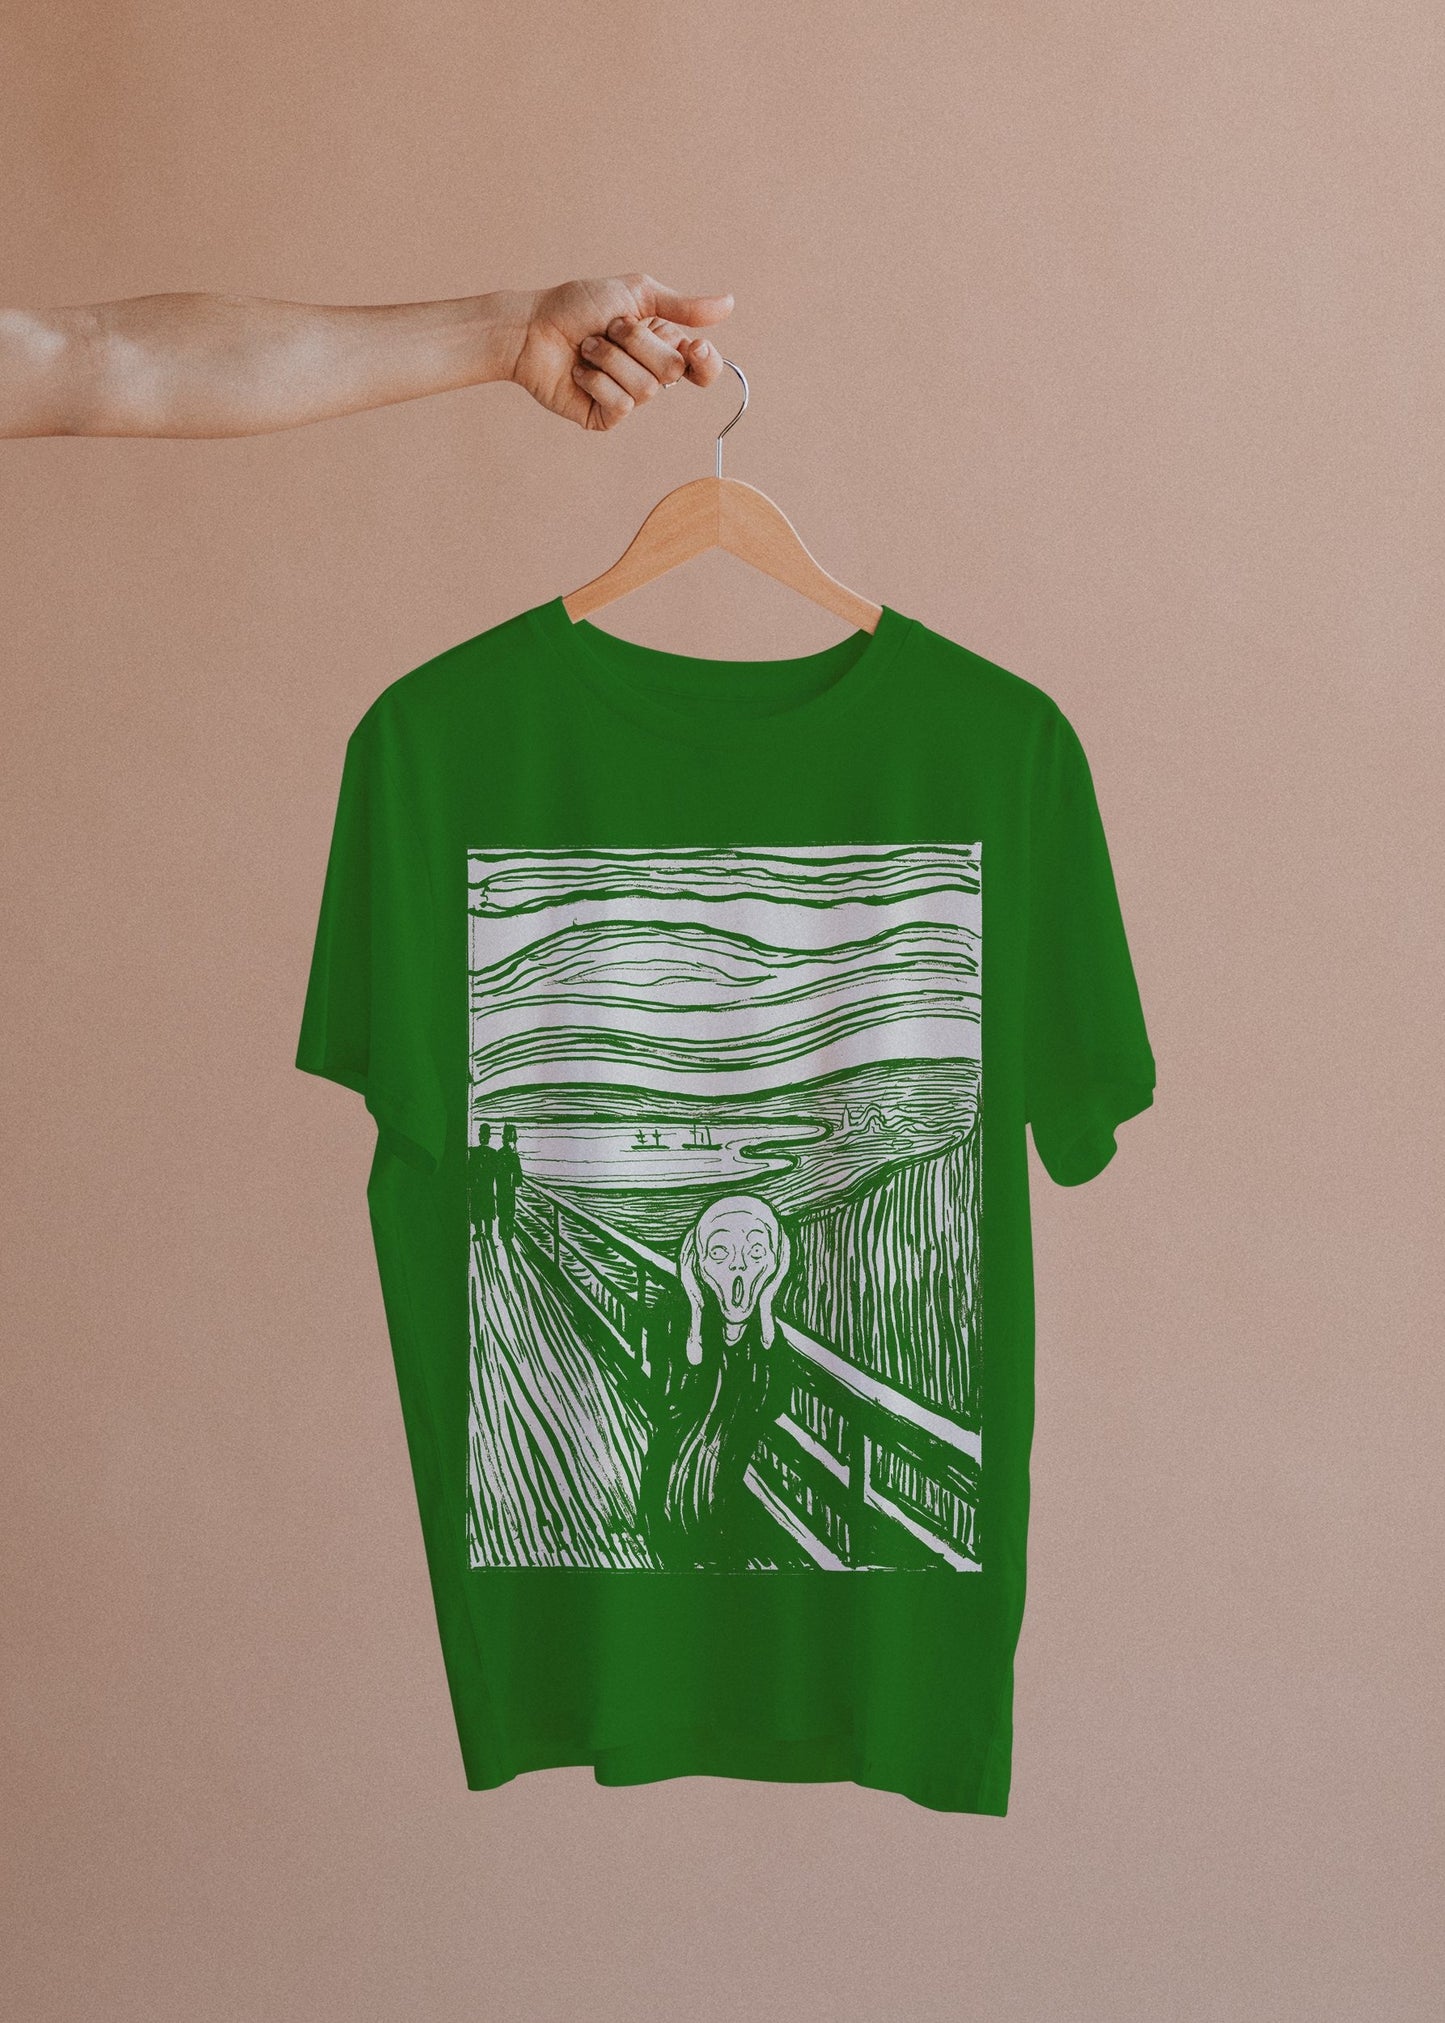 Camiseta O Grito - Edvard Munch - Masculina -camiseta- Editora Datum